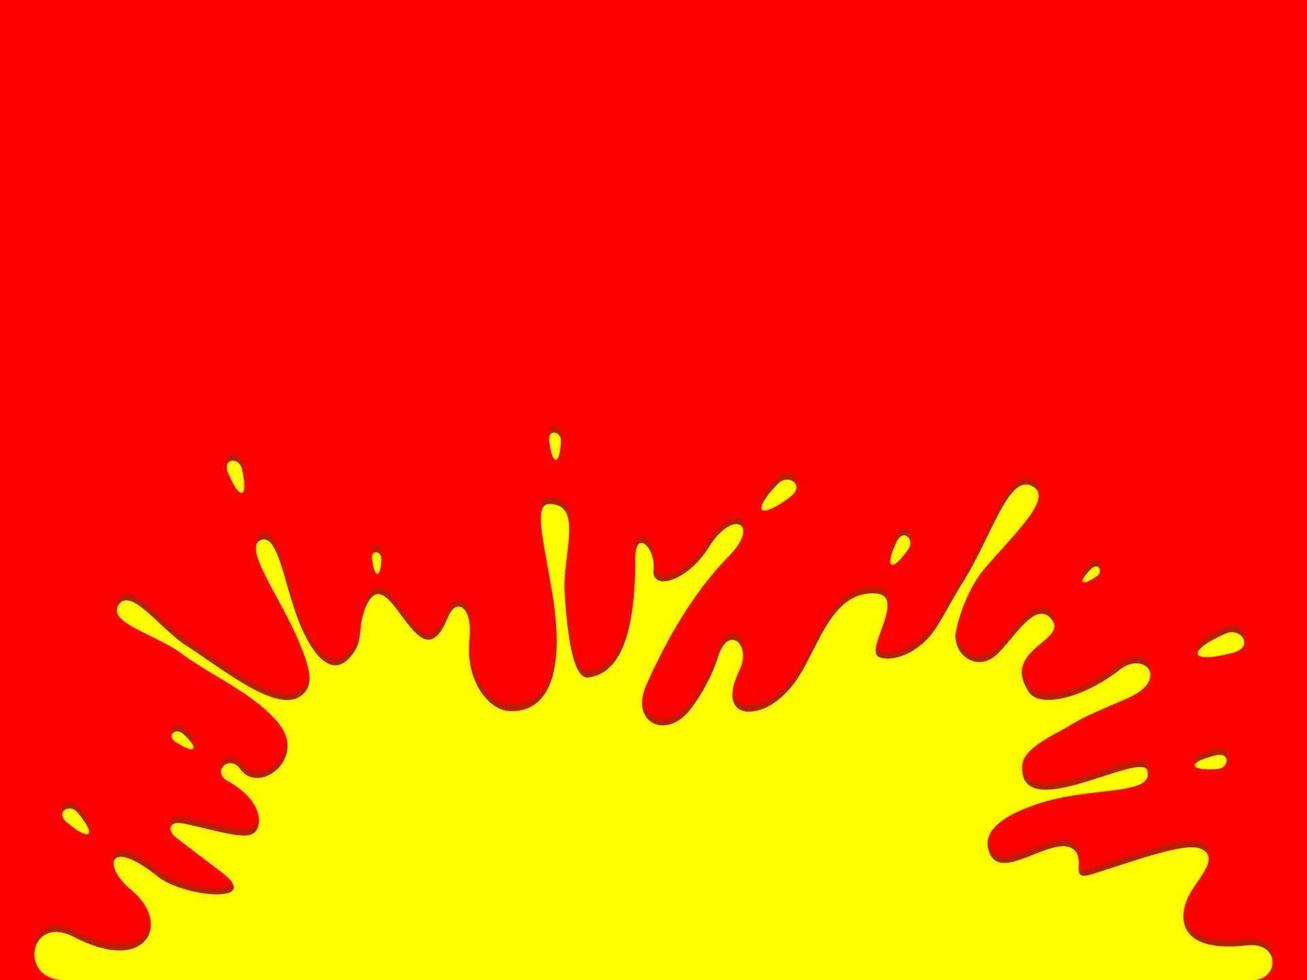 vlek gele verf op rode achtergrond vector